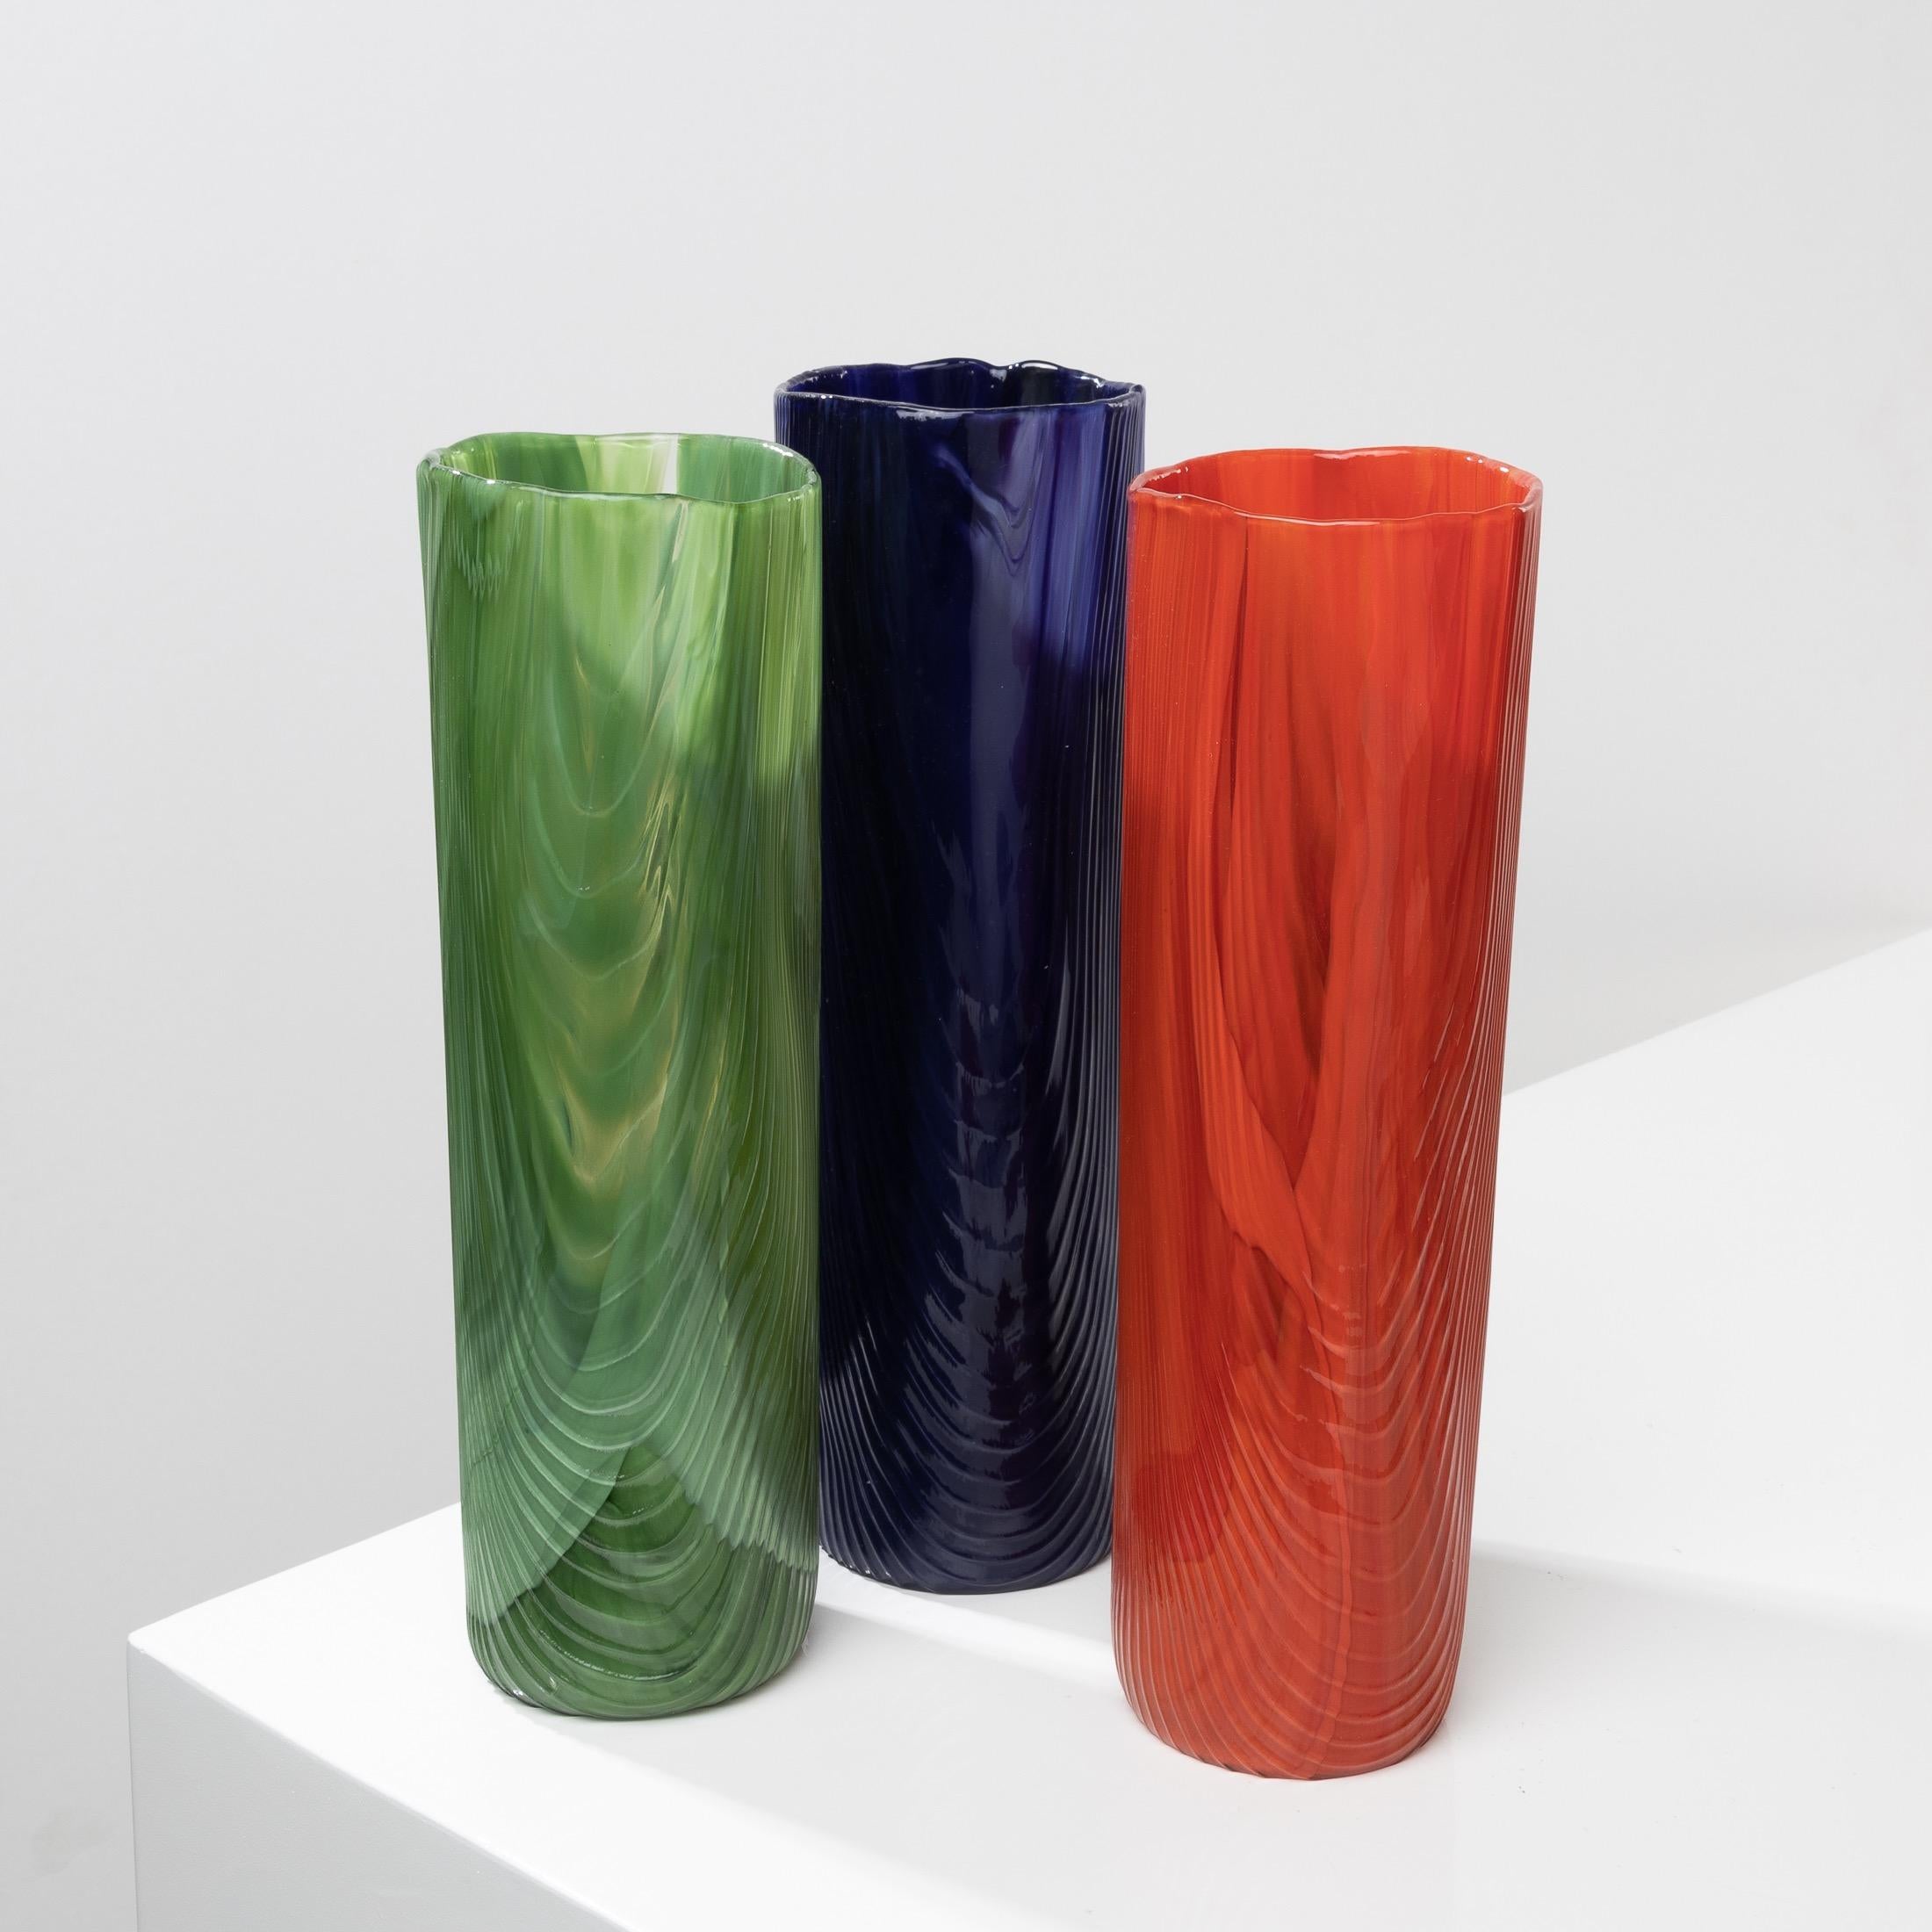 Mid-Century Modern Set of 3 Vases from the “Tronchi” Series by Toni Zuccheri, Venini, Italy